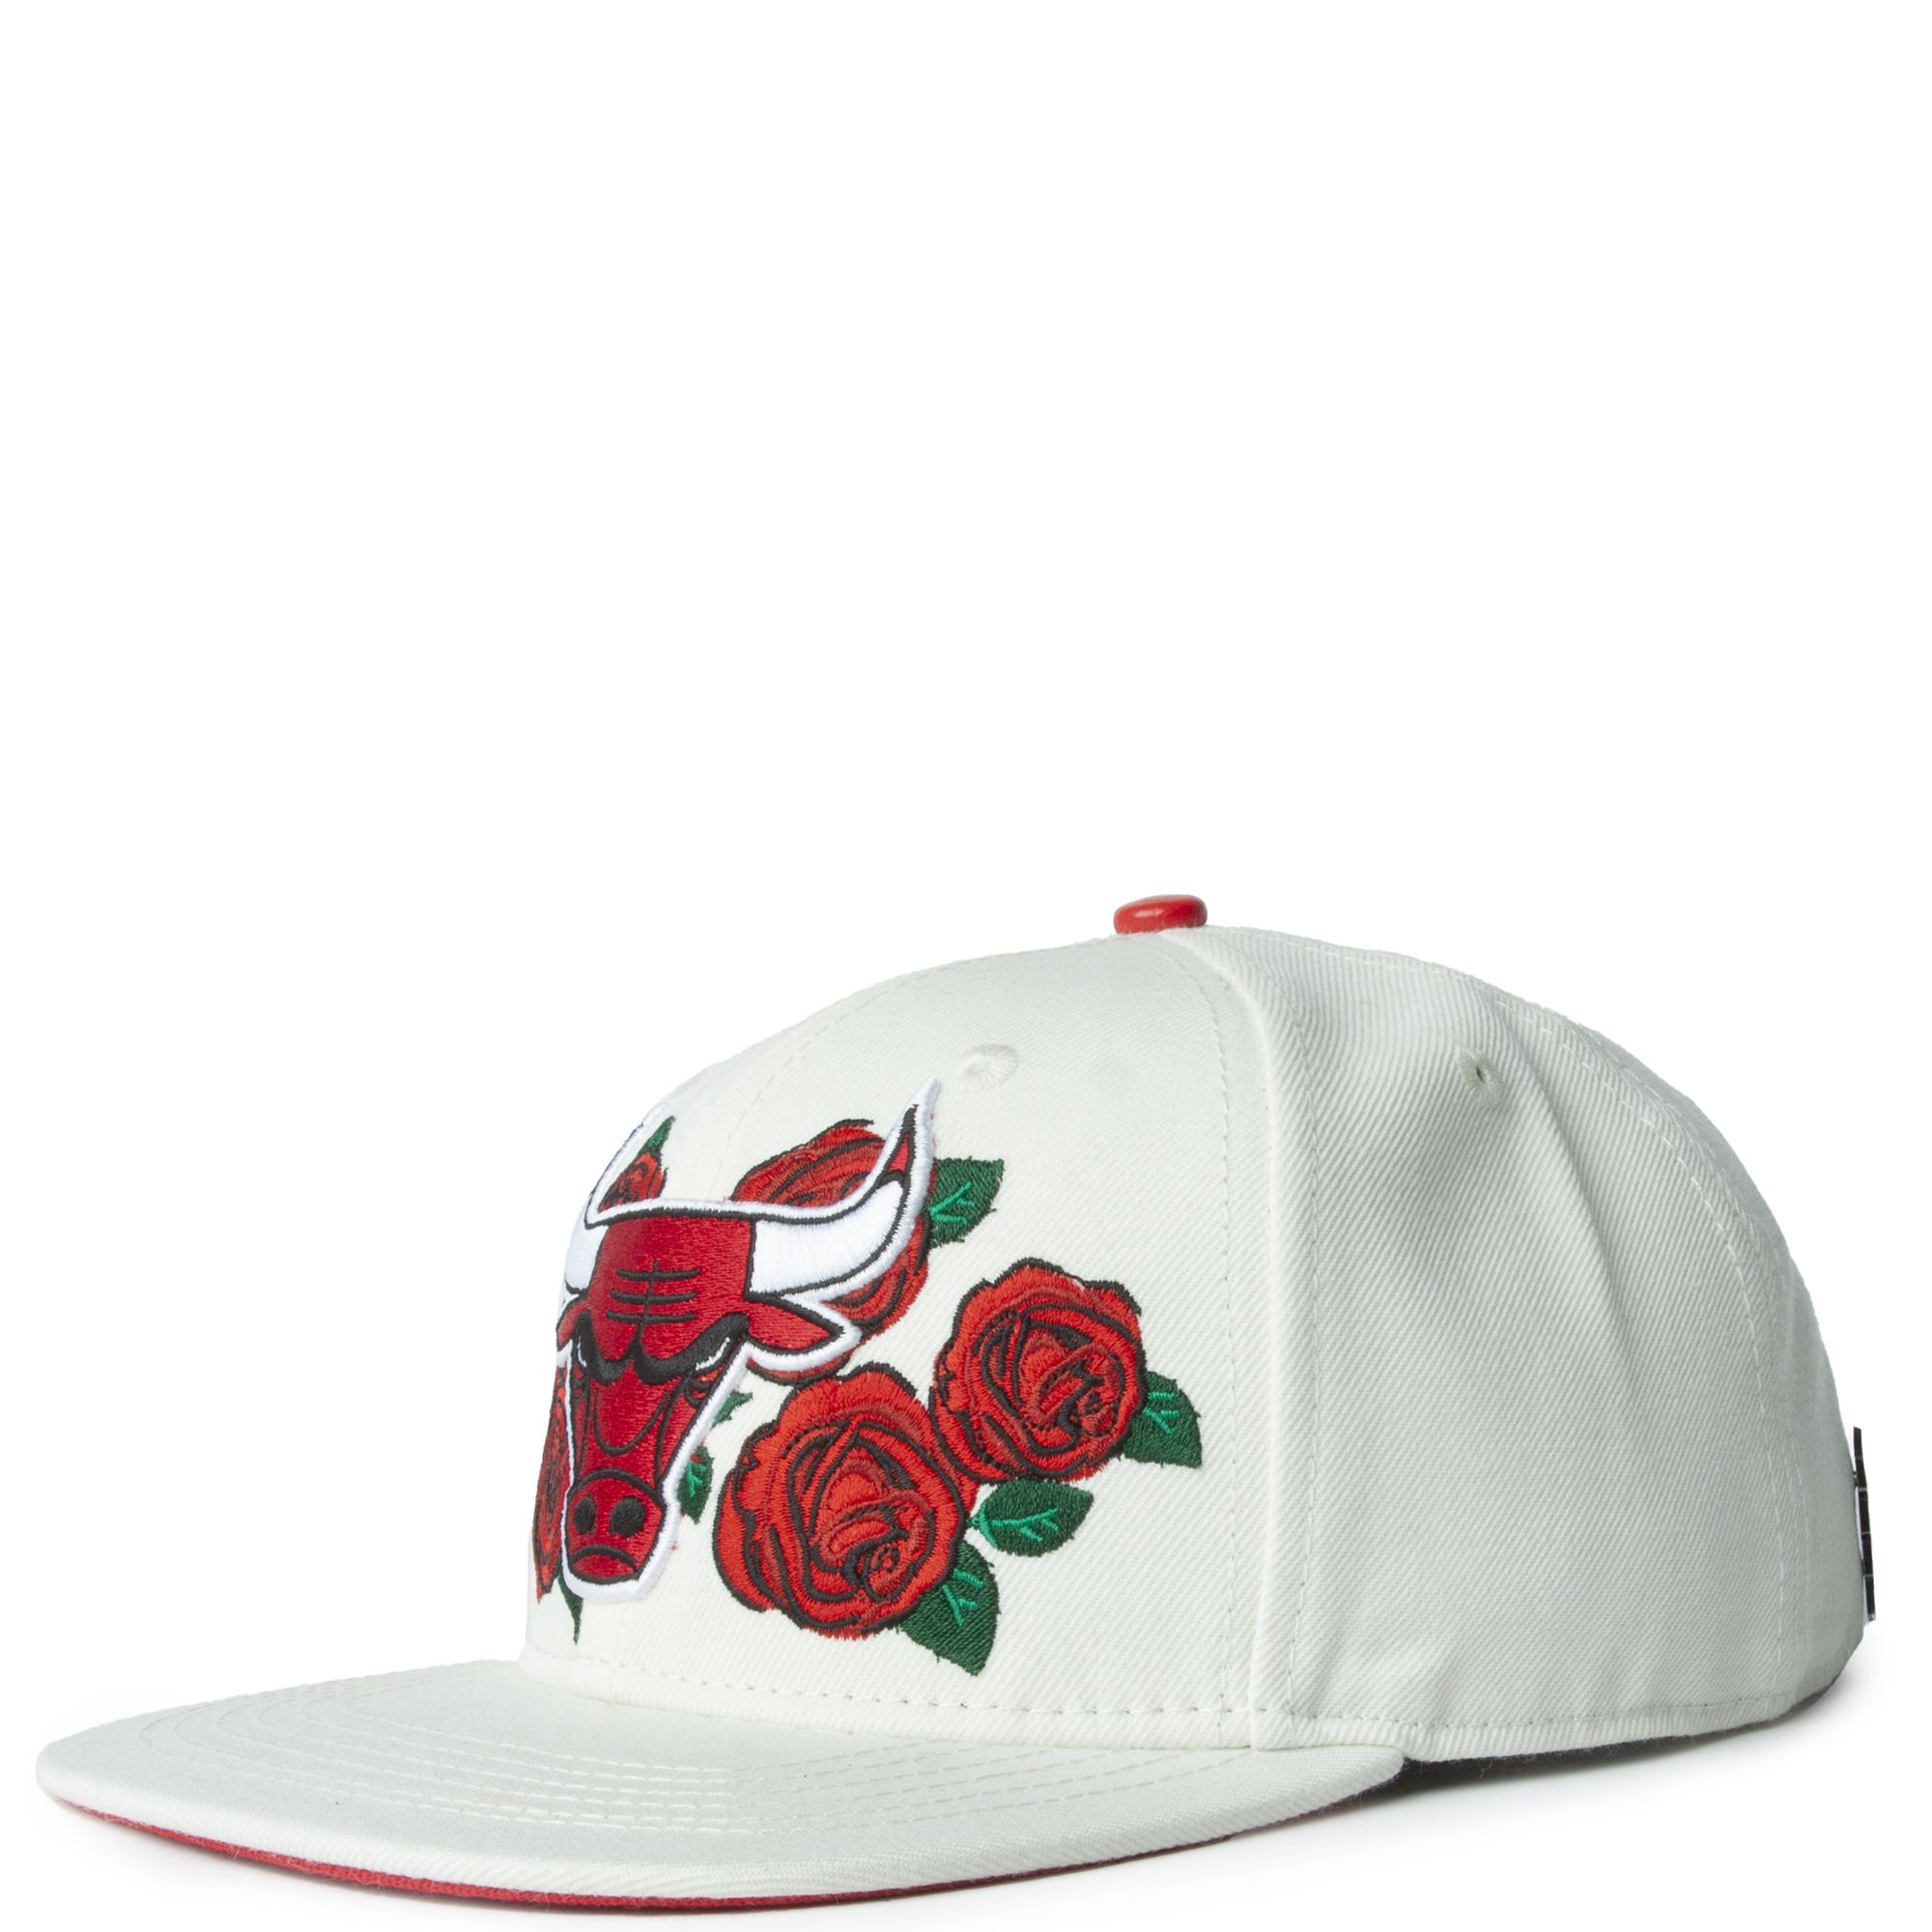 PRO STANDARD Bulls Roses Baseball Jersey BCB155743-EGG - Shiekh